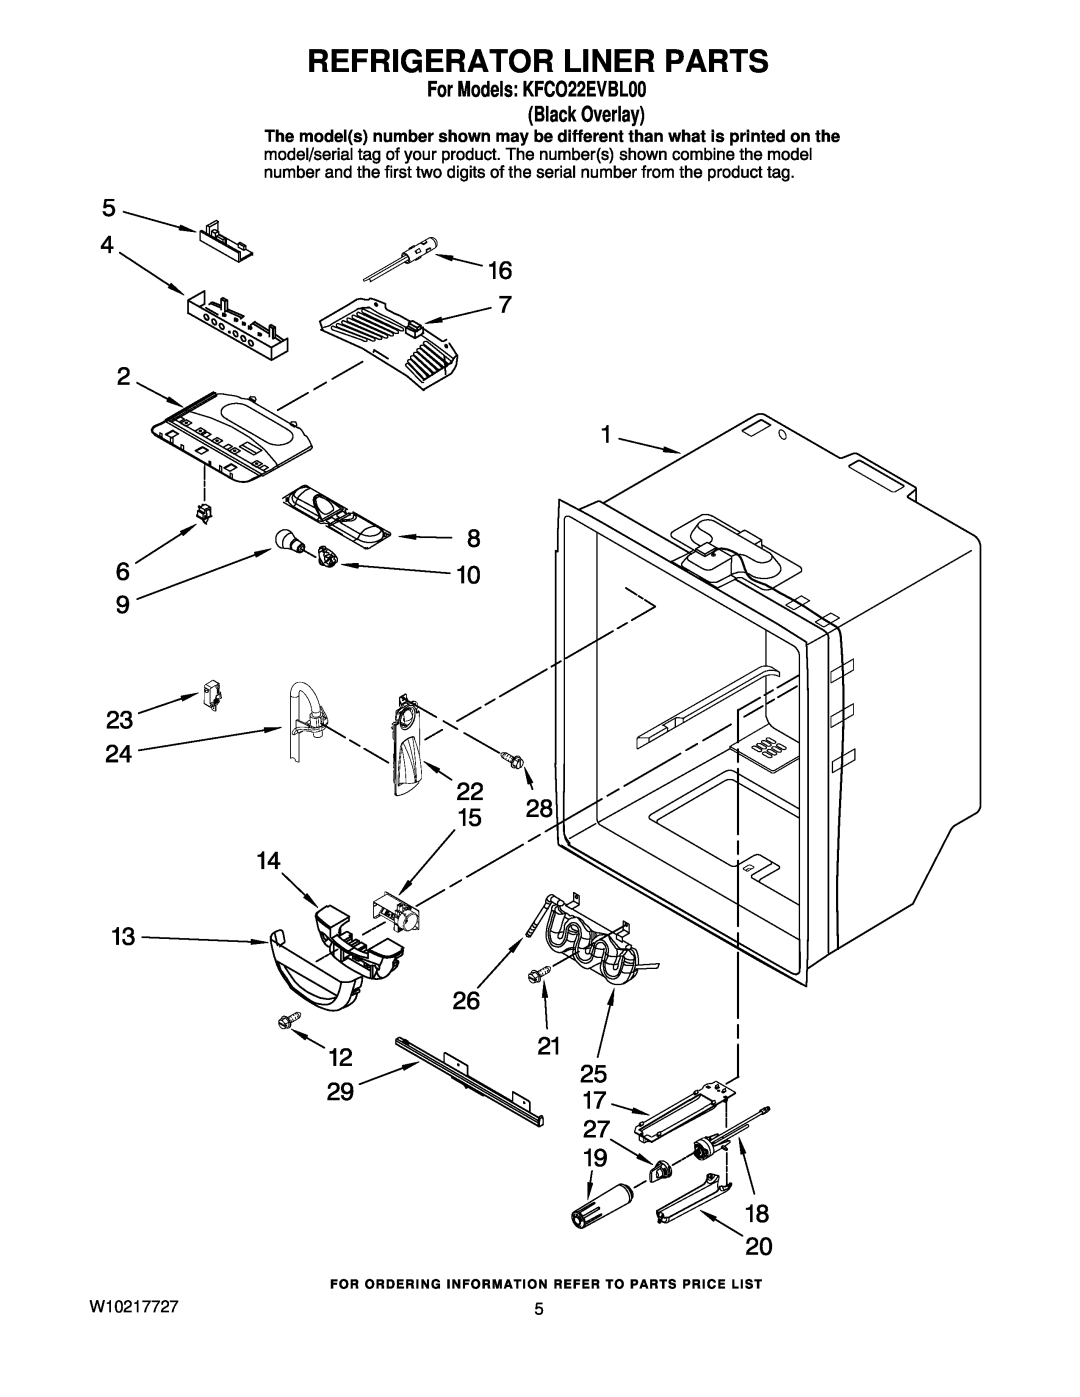 KitchenAid manual Refrigerator Liner Parts, For Models KFCO22EVBL00 Black Overlay 